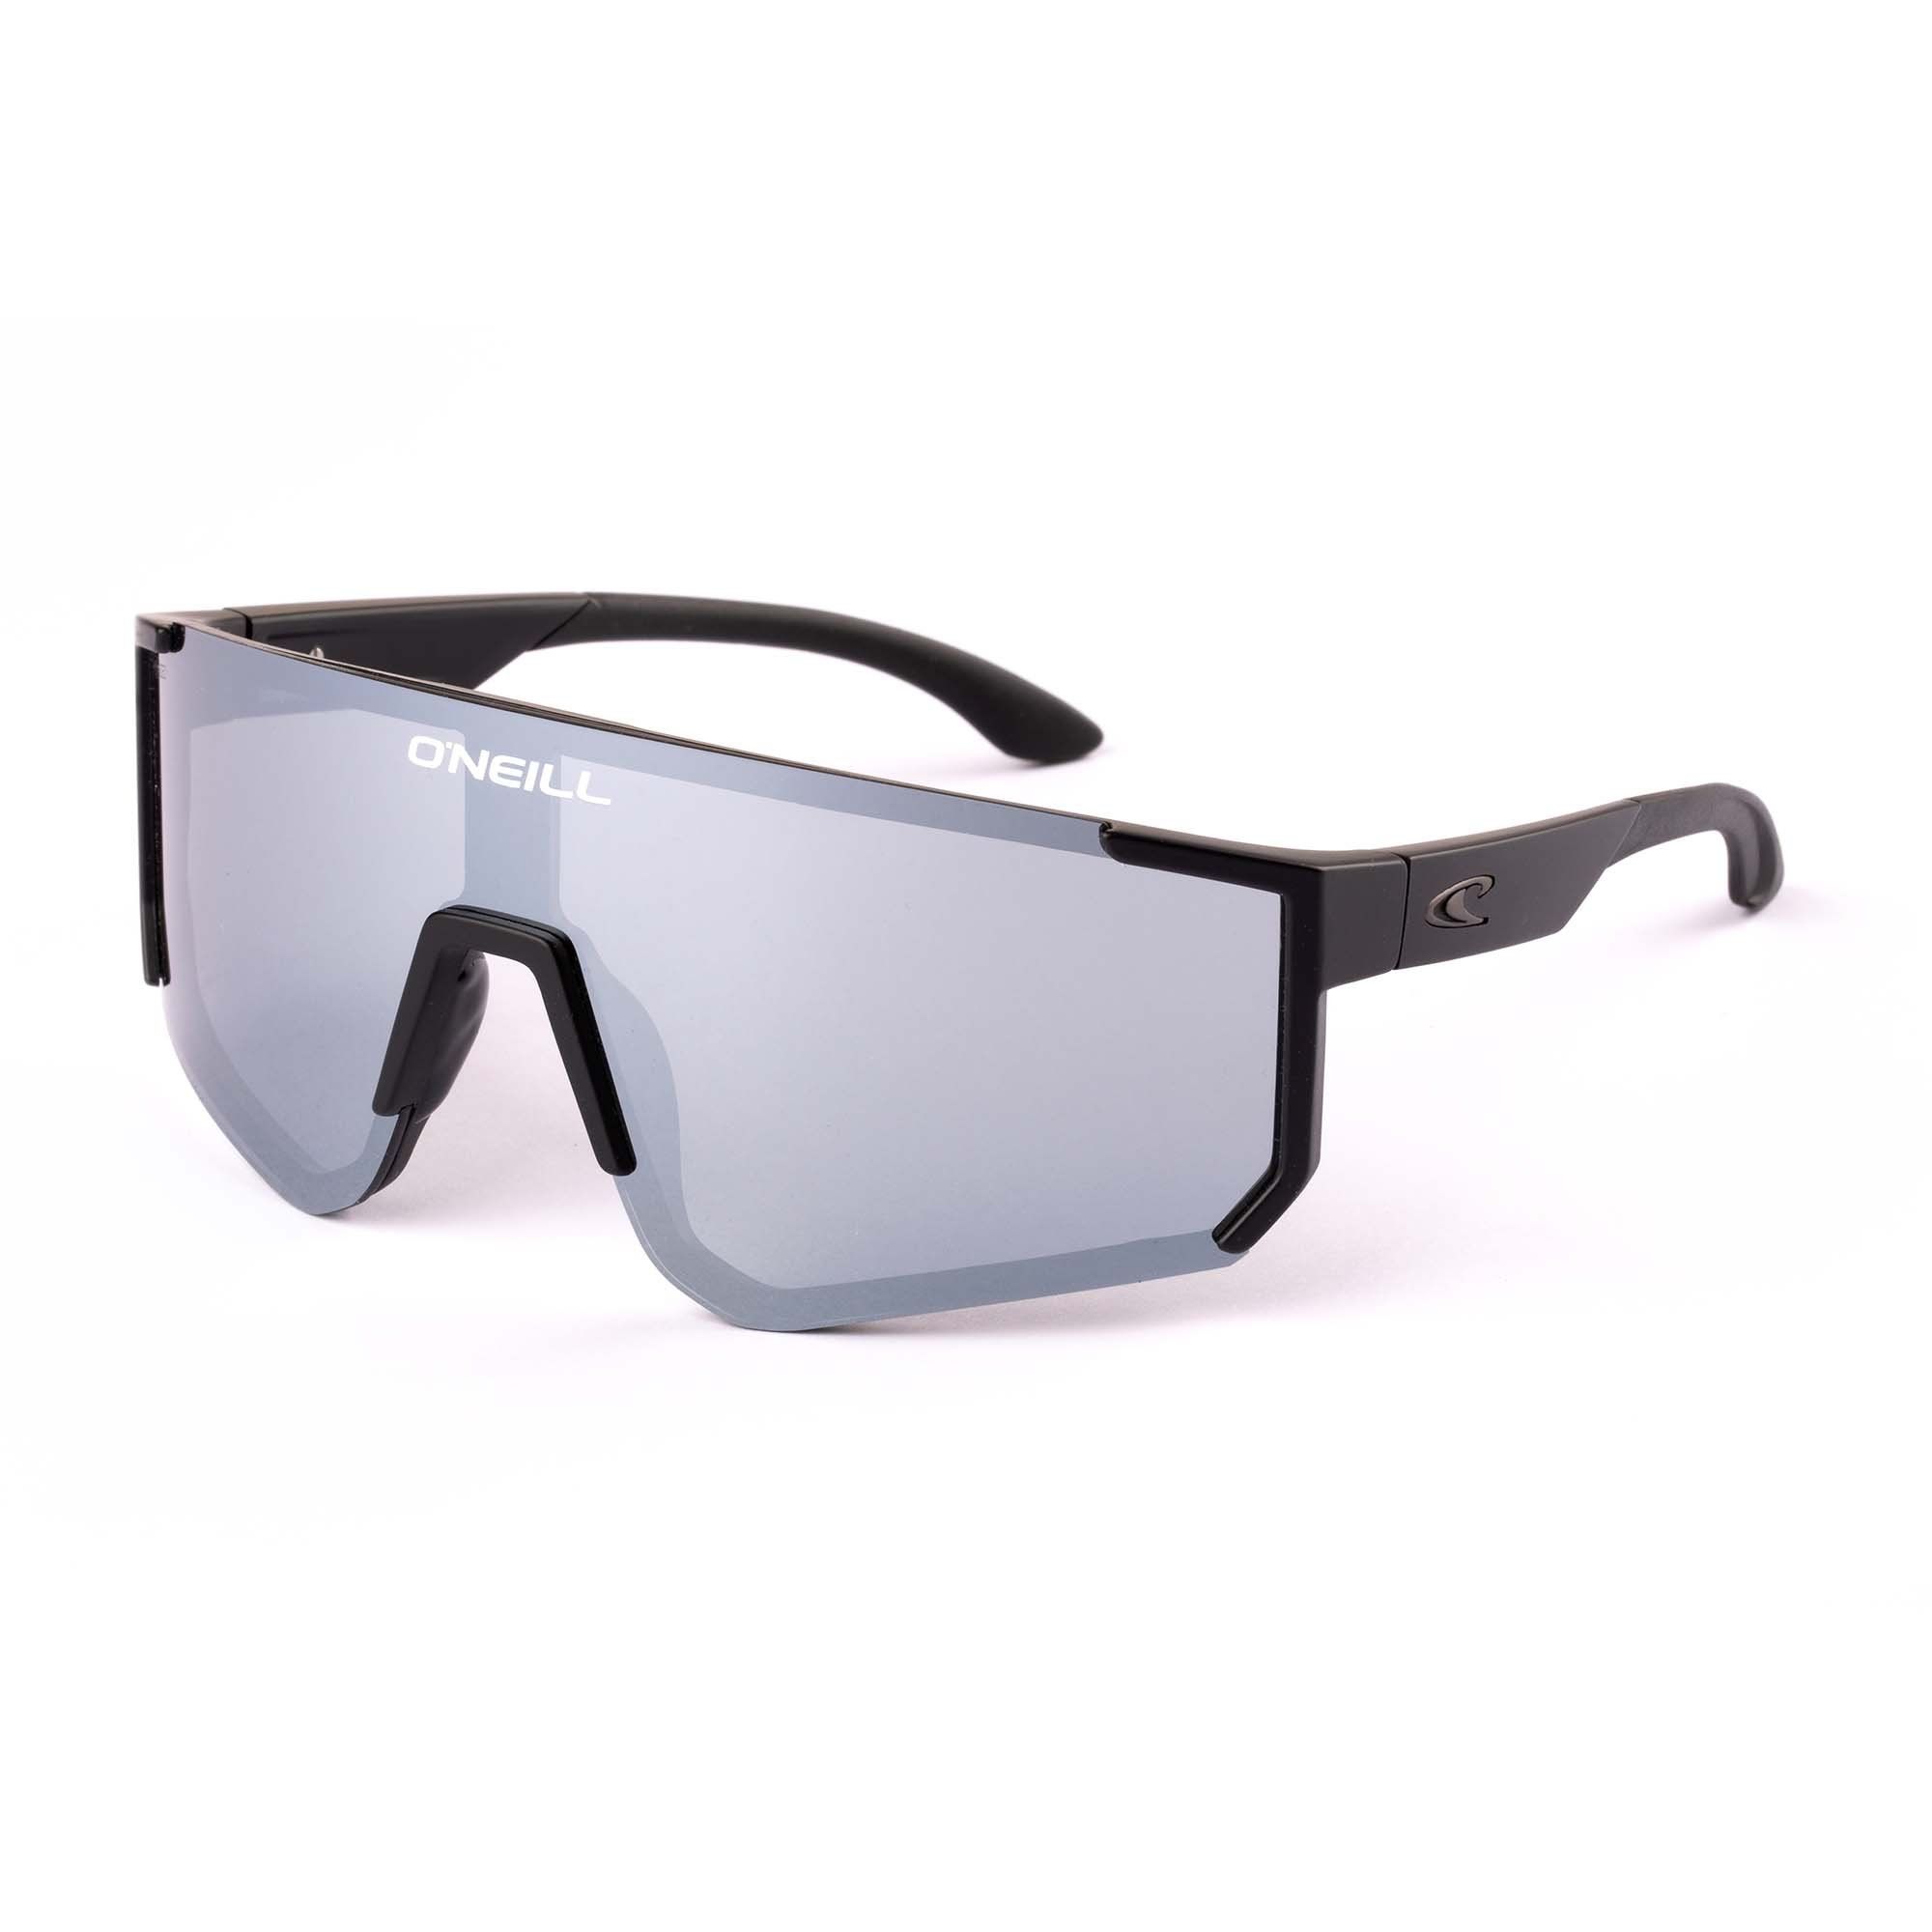 9038-2.0 104P Sport Mask  Visor Sunglasses 